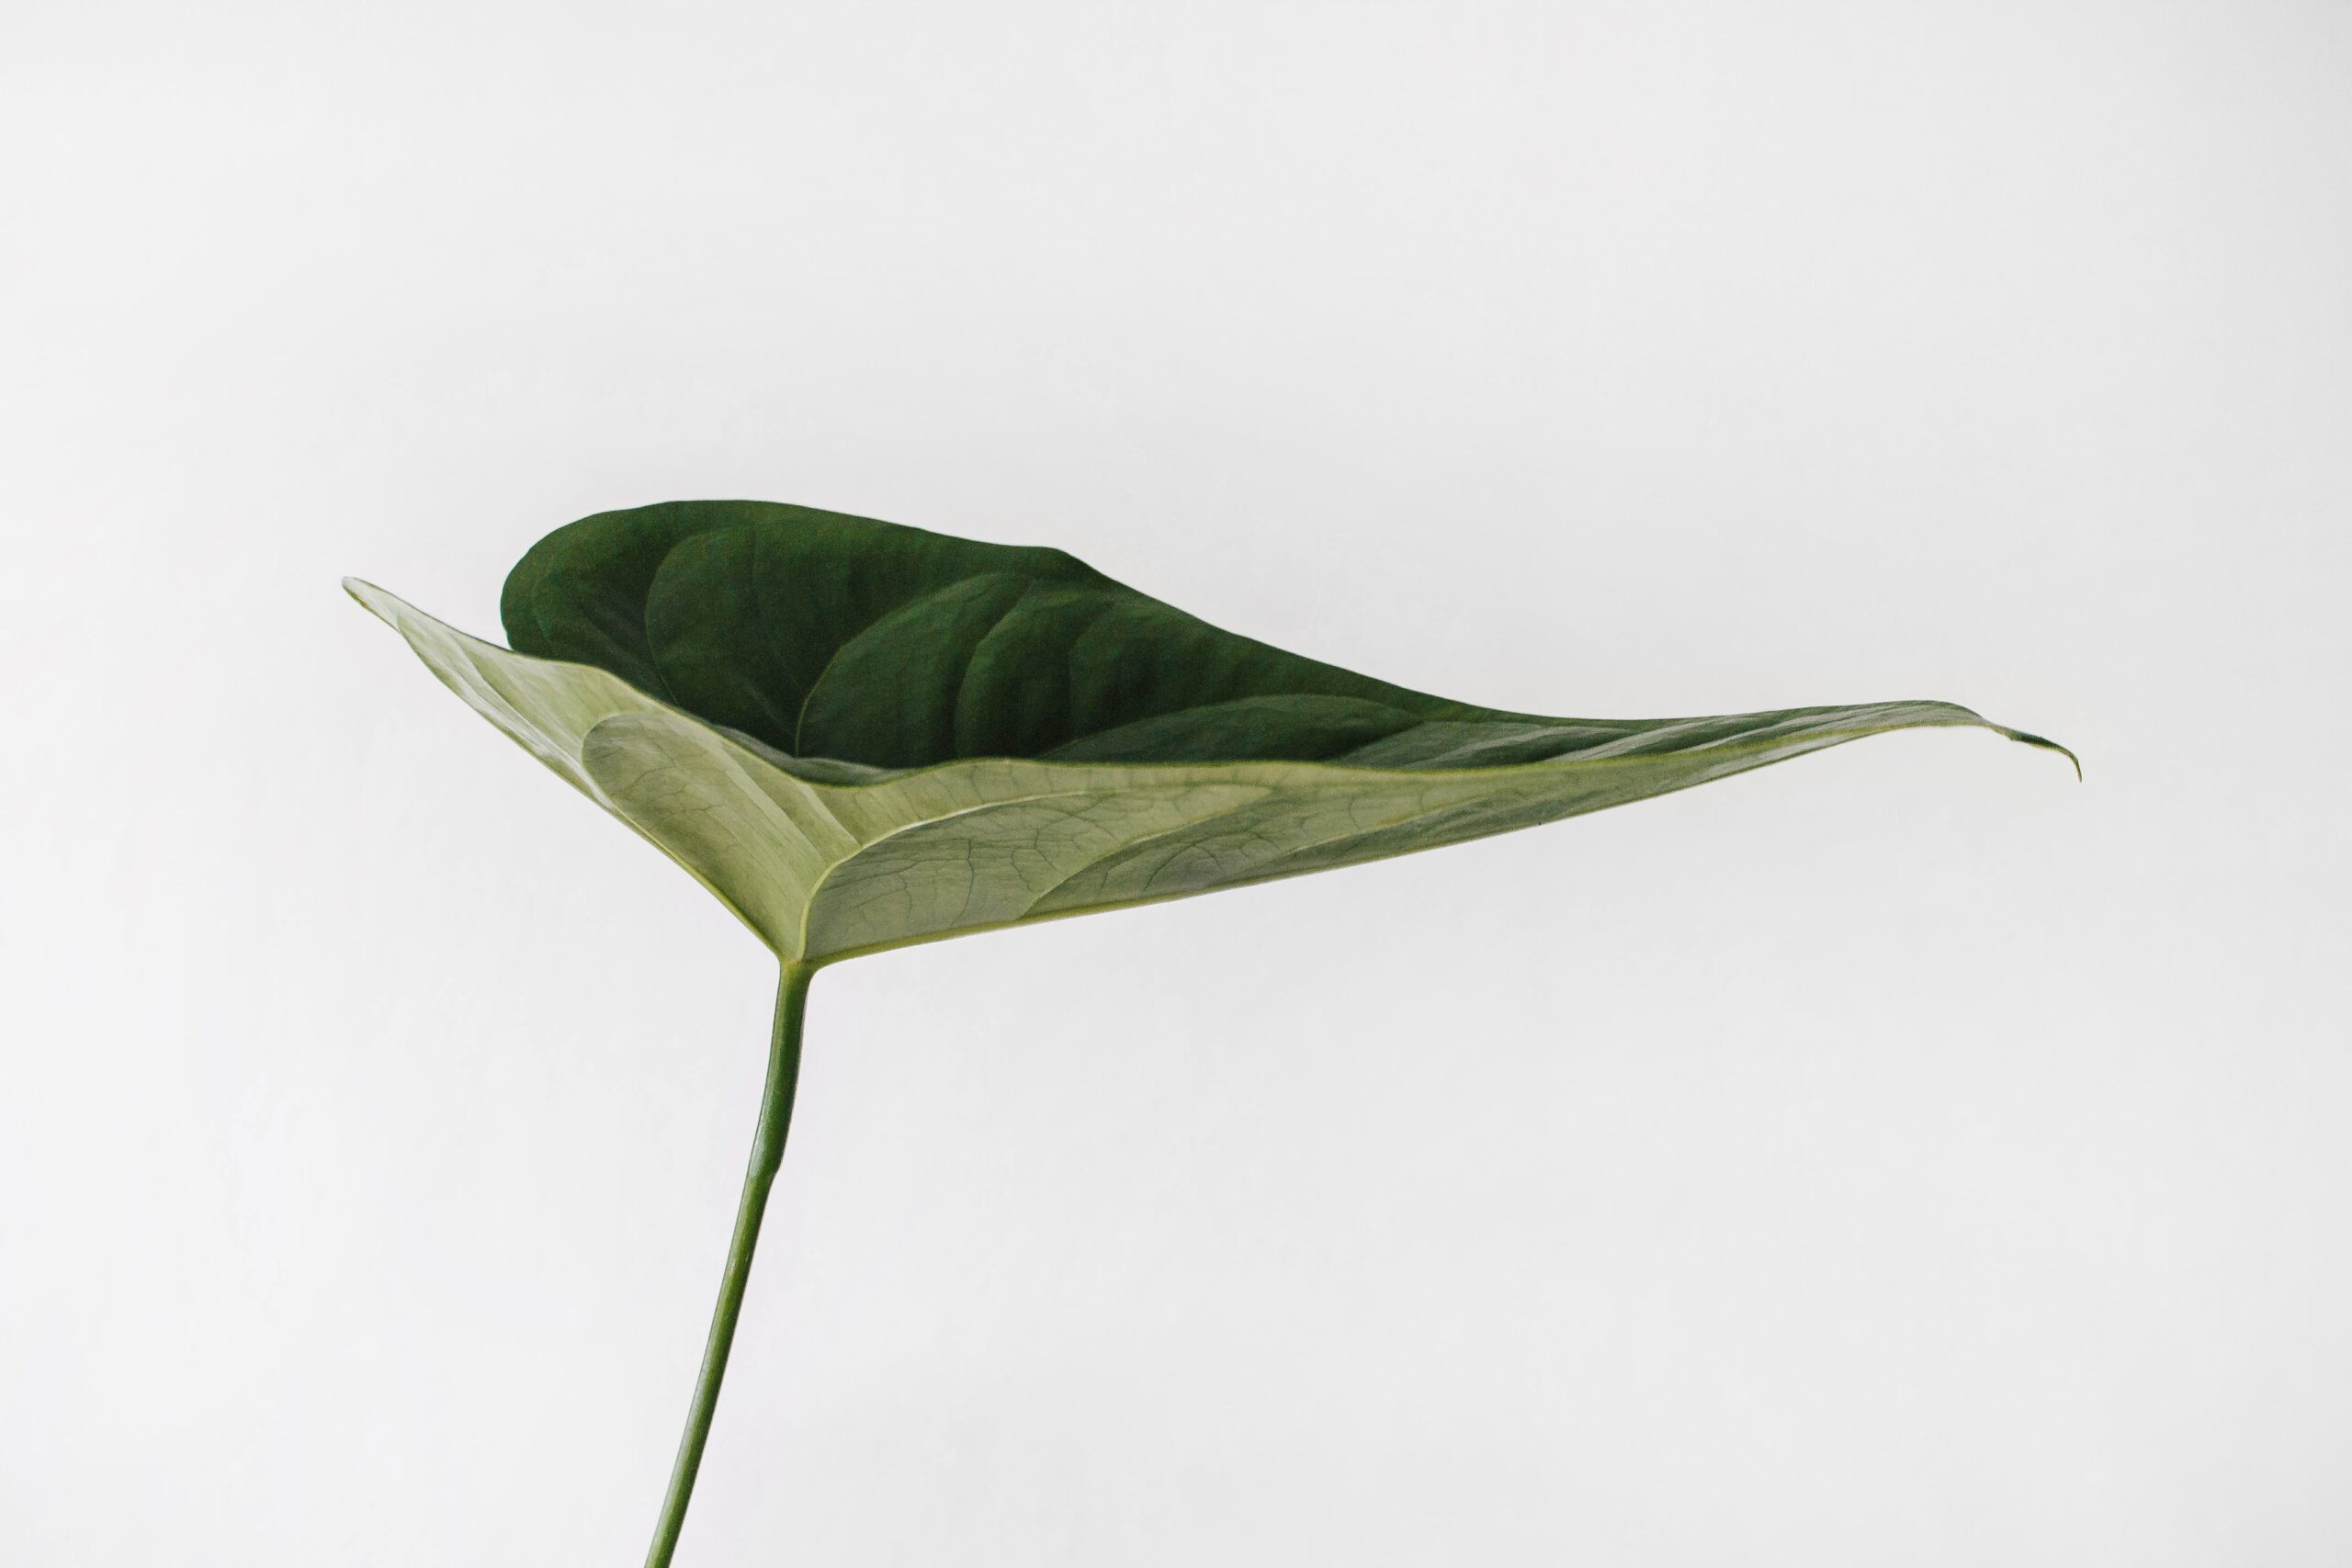 A single plant leaf